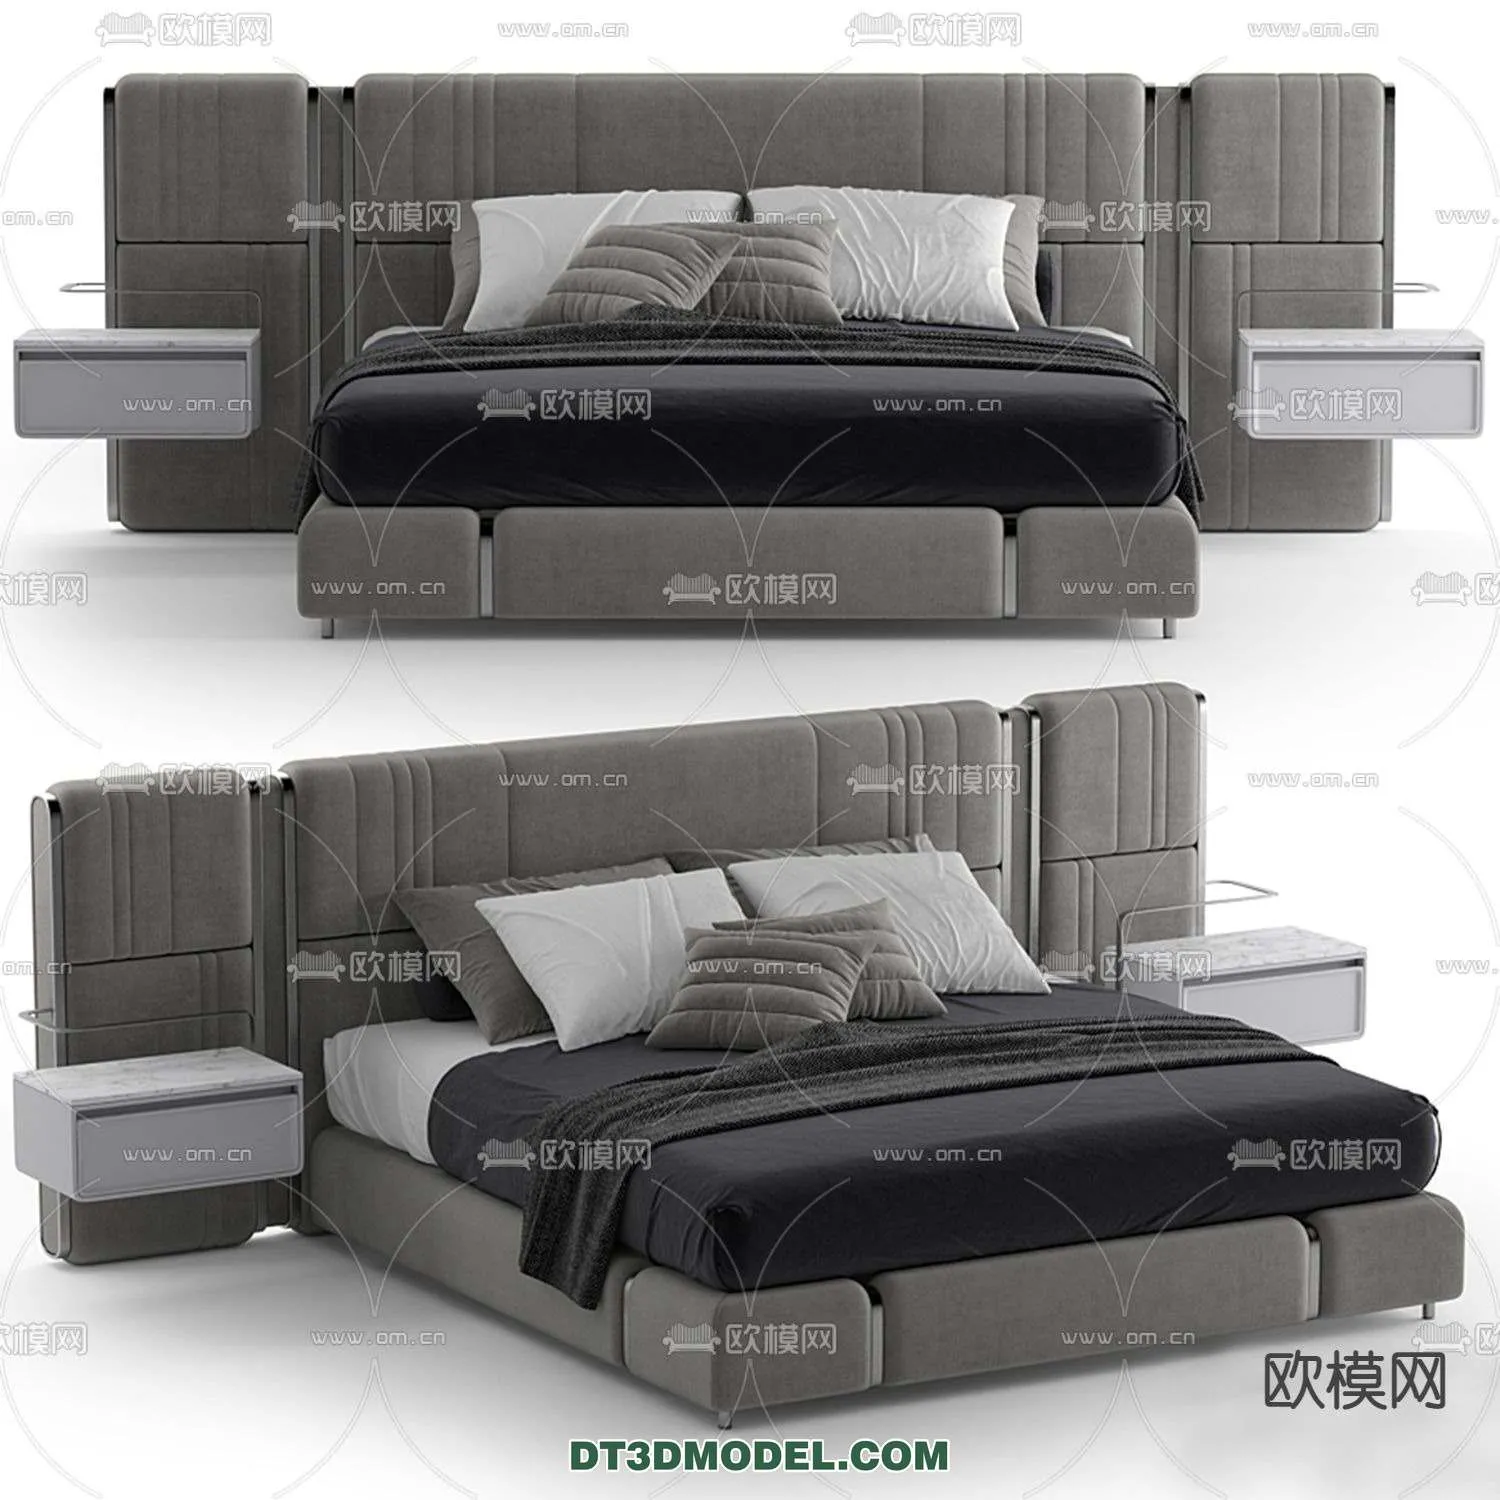 Double Bed 3D Models – 0051